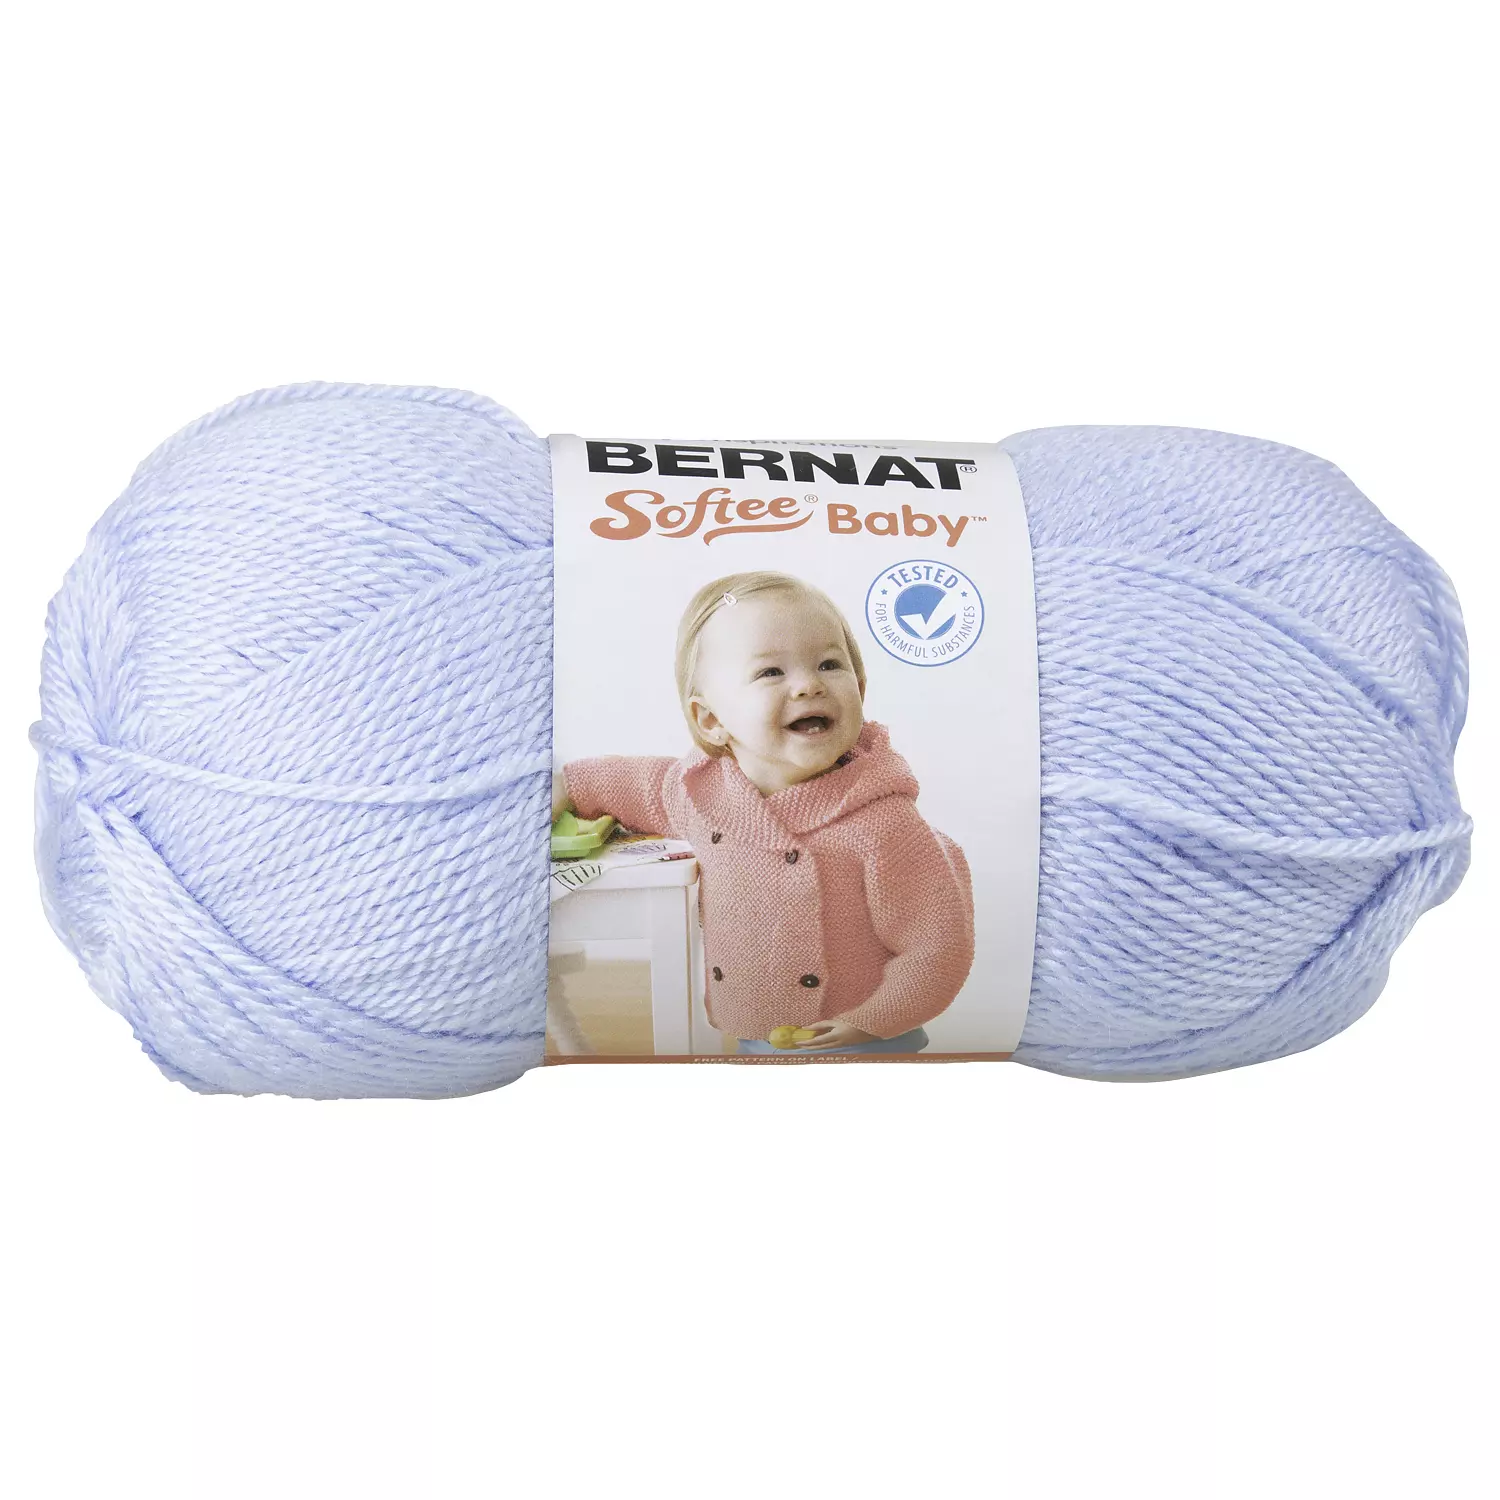 Bernat Softee Baby - Laine acrylique, bleu clair